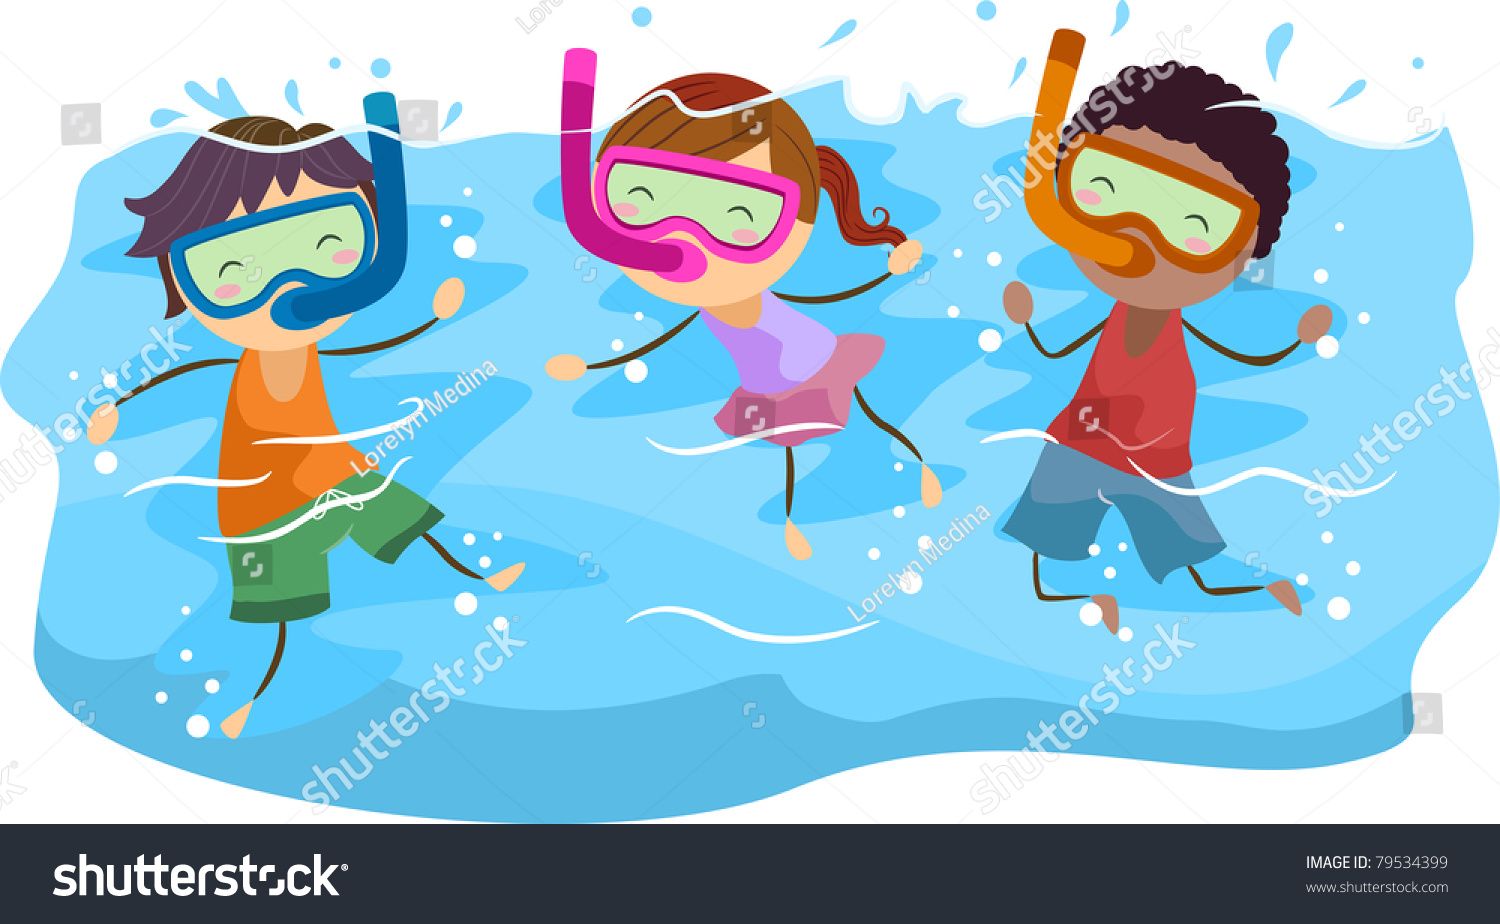 Illustration Of Kids Snorkeling - 79534399 : Shutterstock